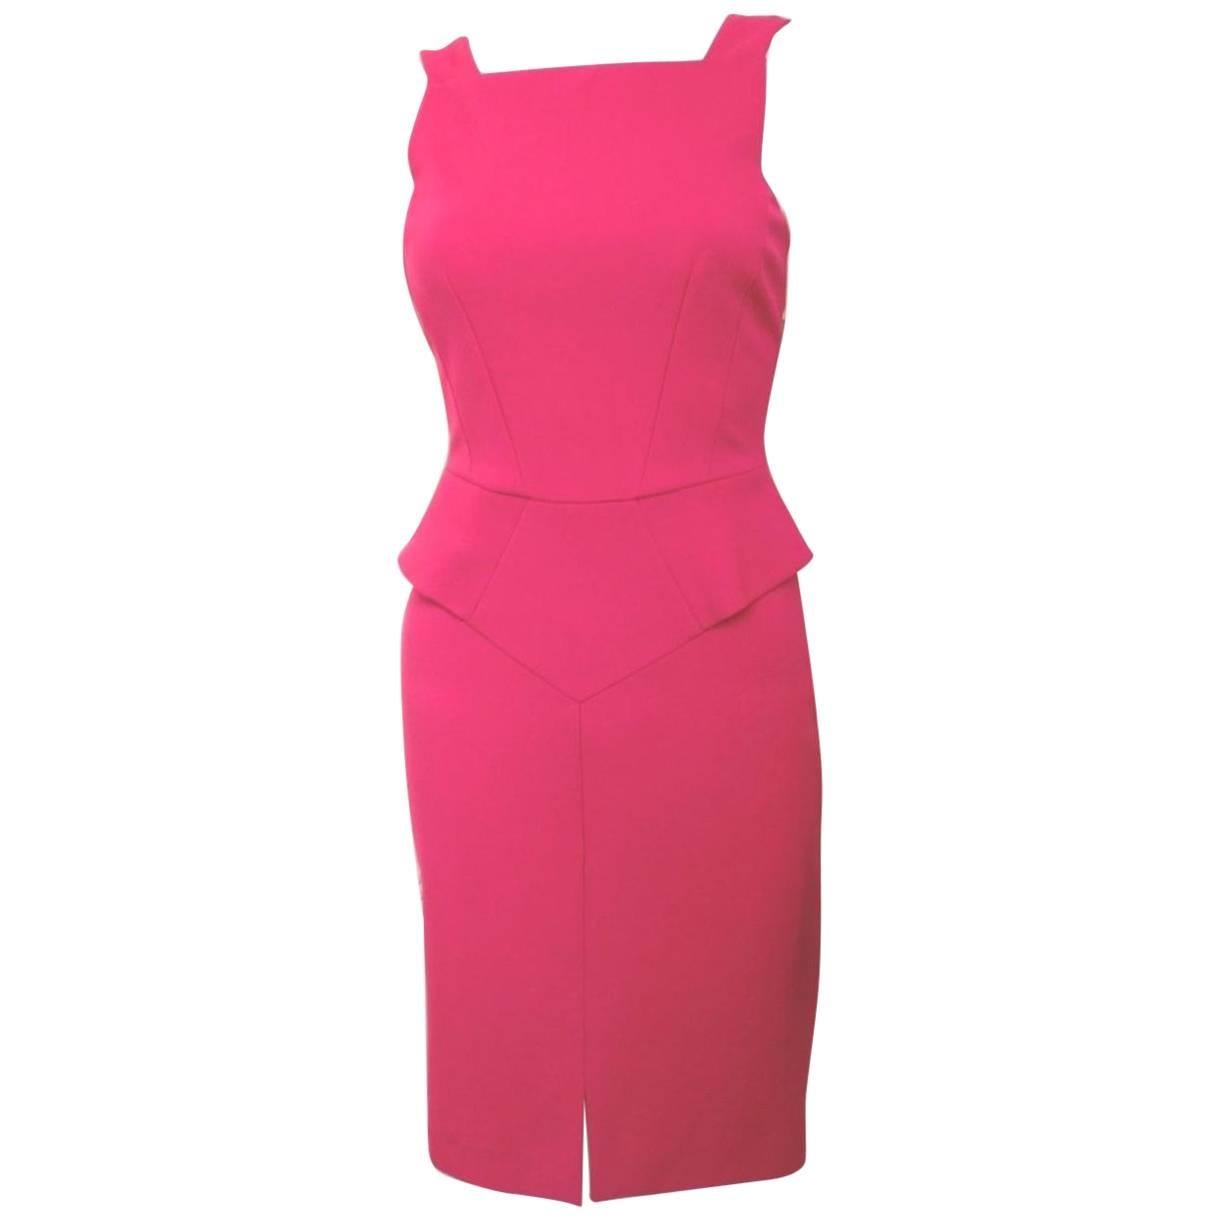 New EMILIO PUCCI Fuchsia Pink Stretch Dress IT 40 uk 8  For Sale